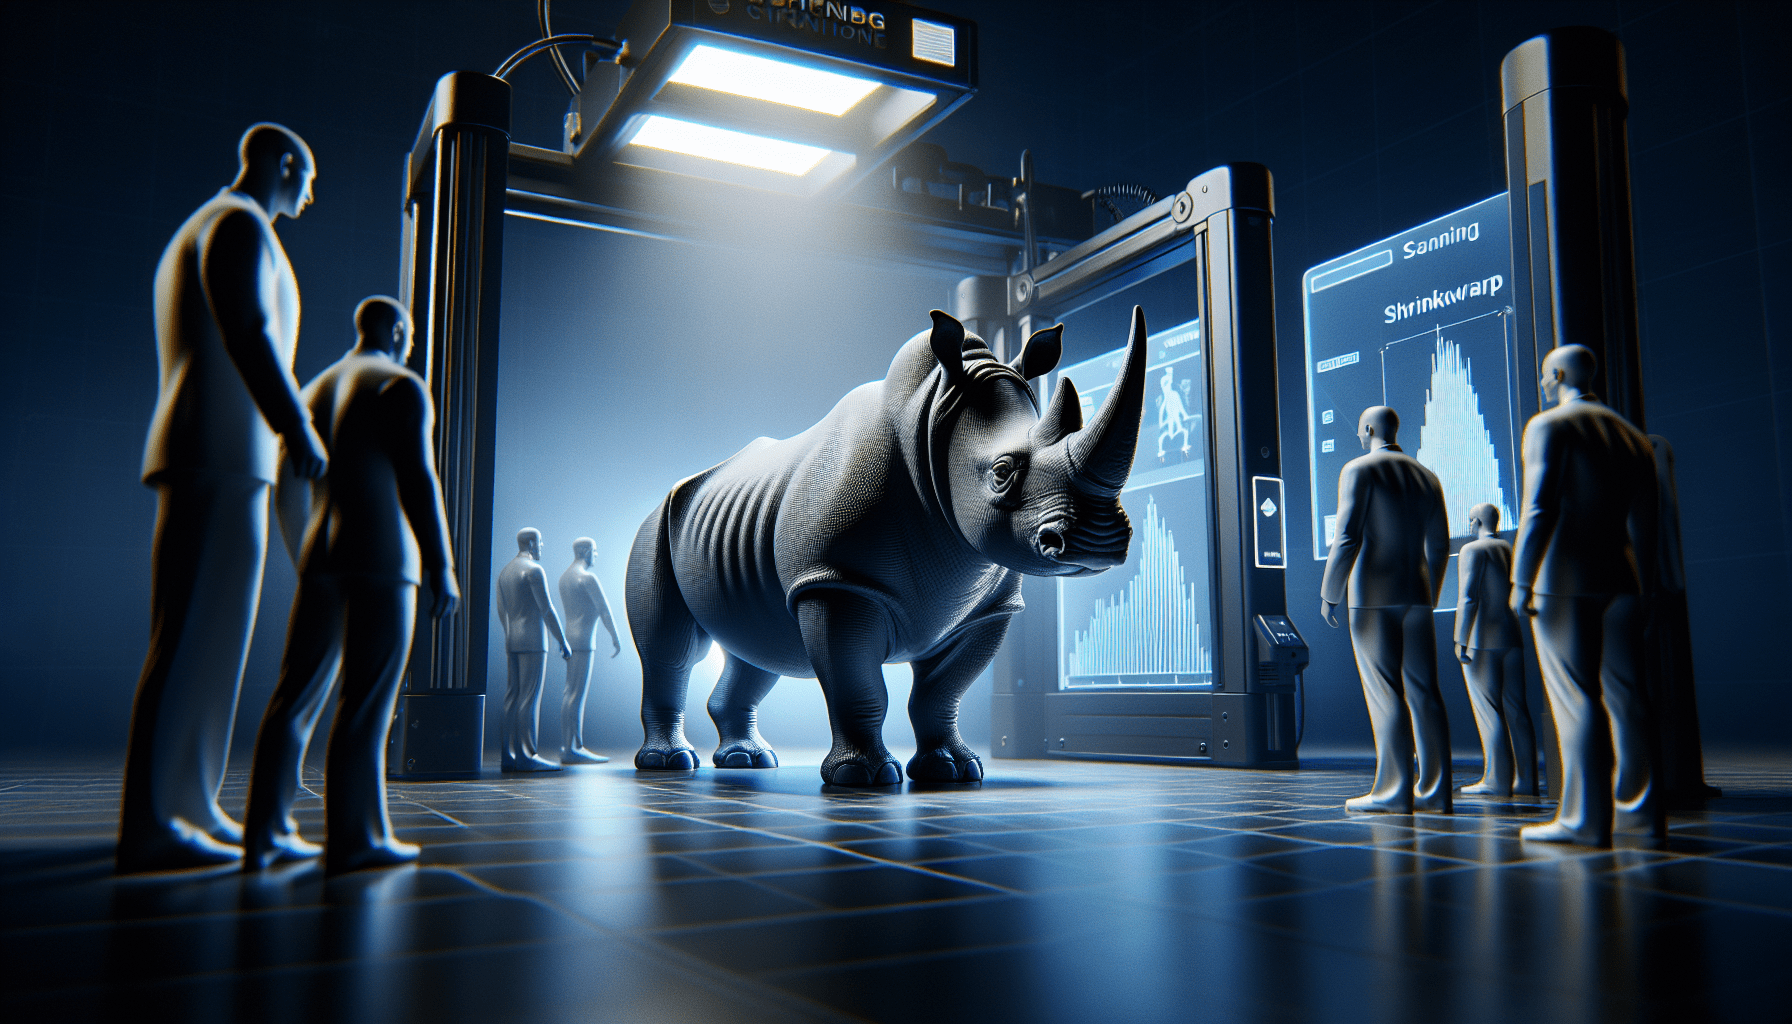 rhino3d-8-revolutionizes-3d-scanning-with-innovative-shrinkwrap-function-1 Rhino3D 8 Revolutionizes 3D Scanning with Innovative Shrinkwrap Function